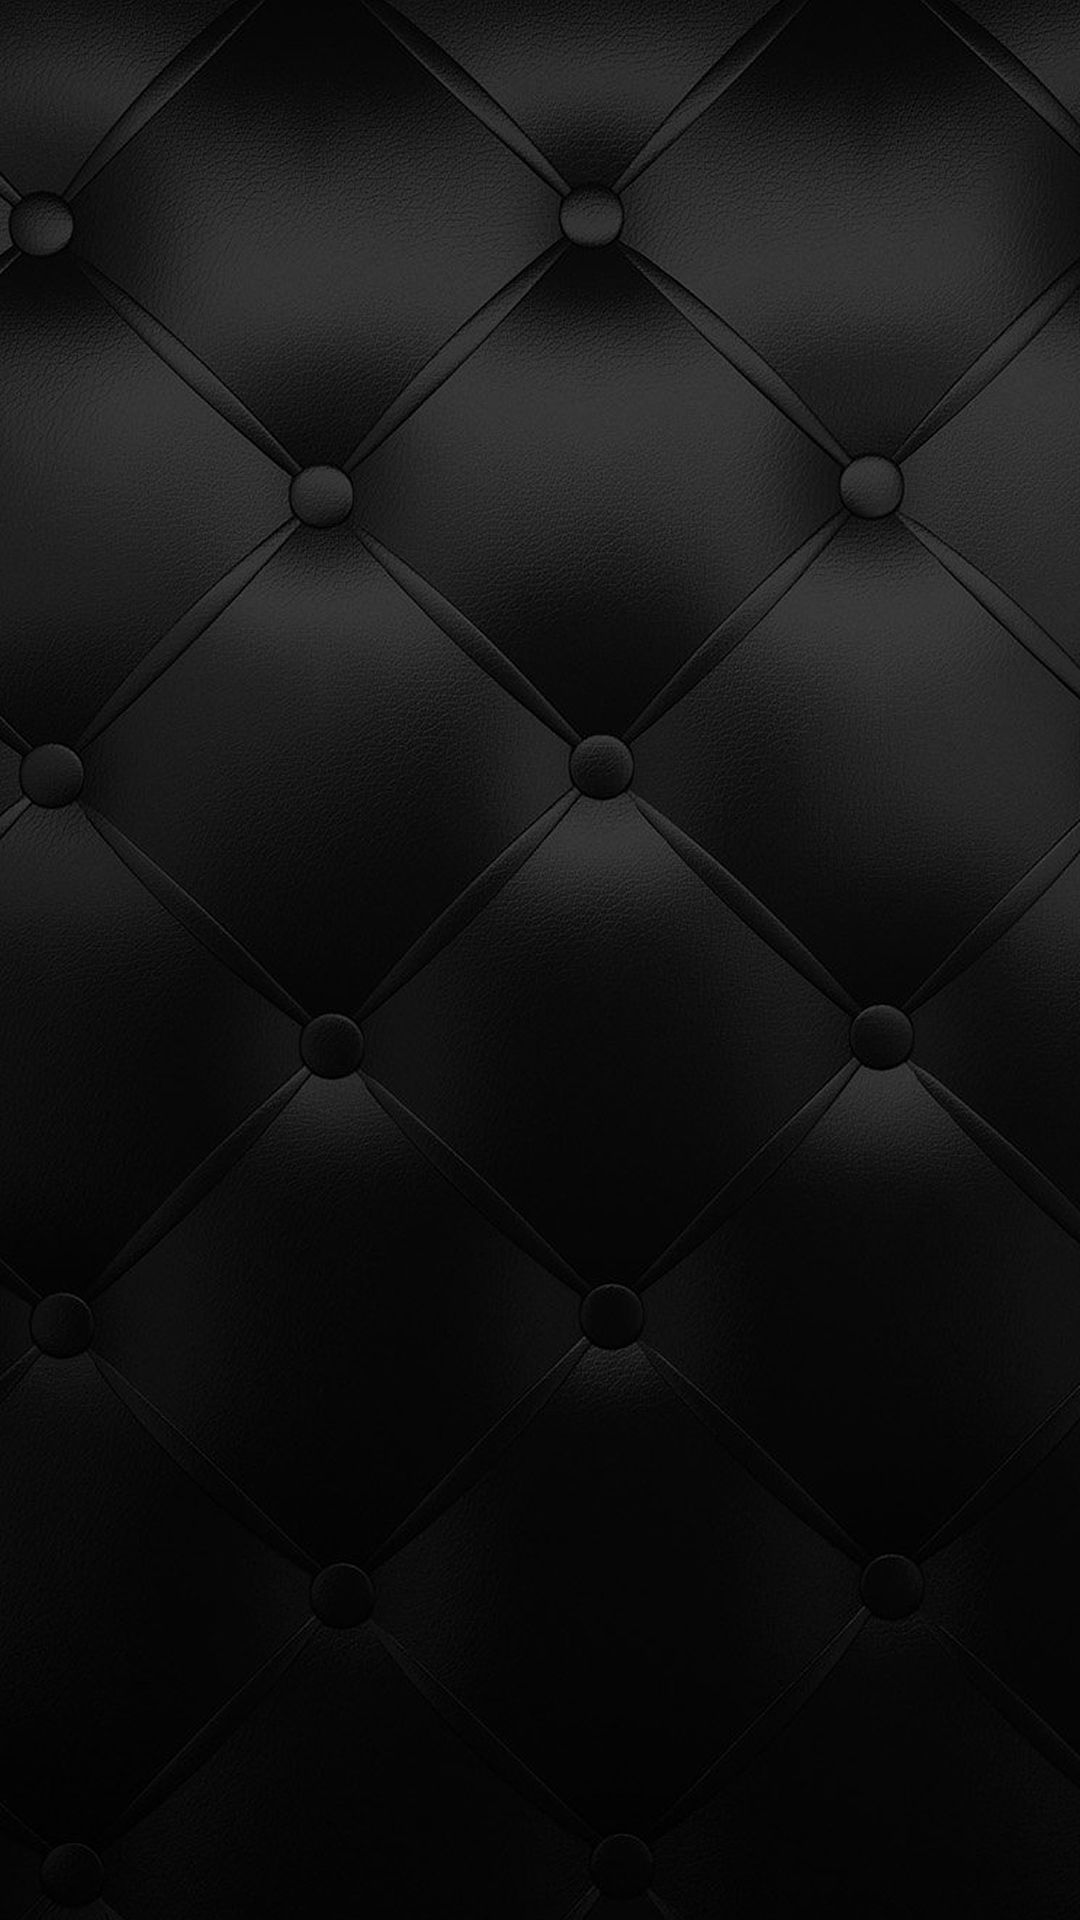 Sofa Black Texture Pattern iPhone 6 Wallpaper Download iPhone